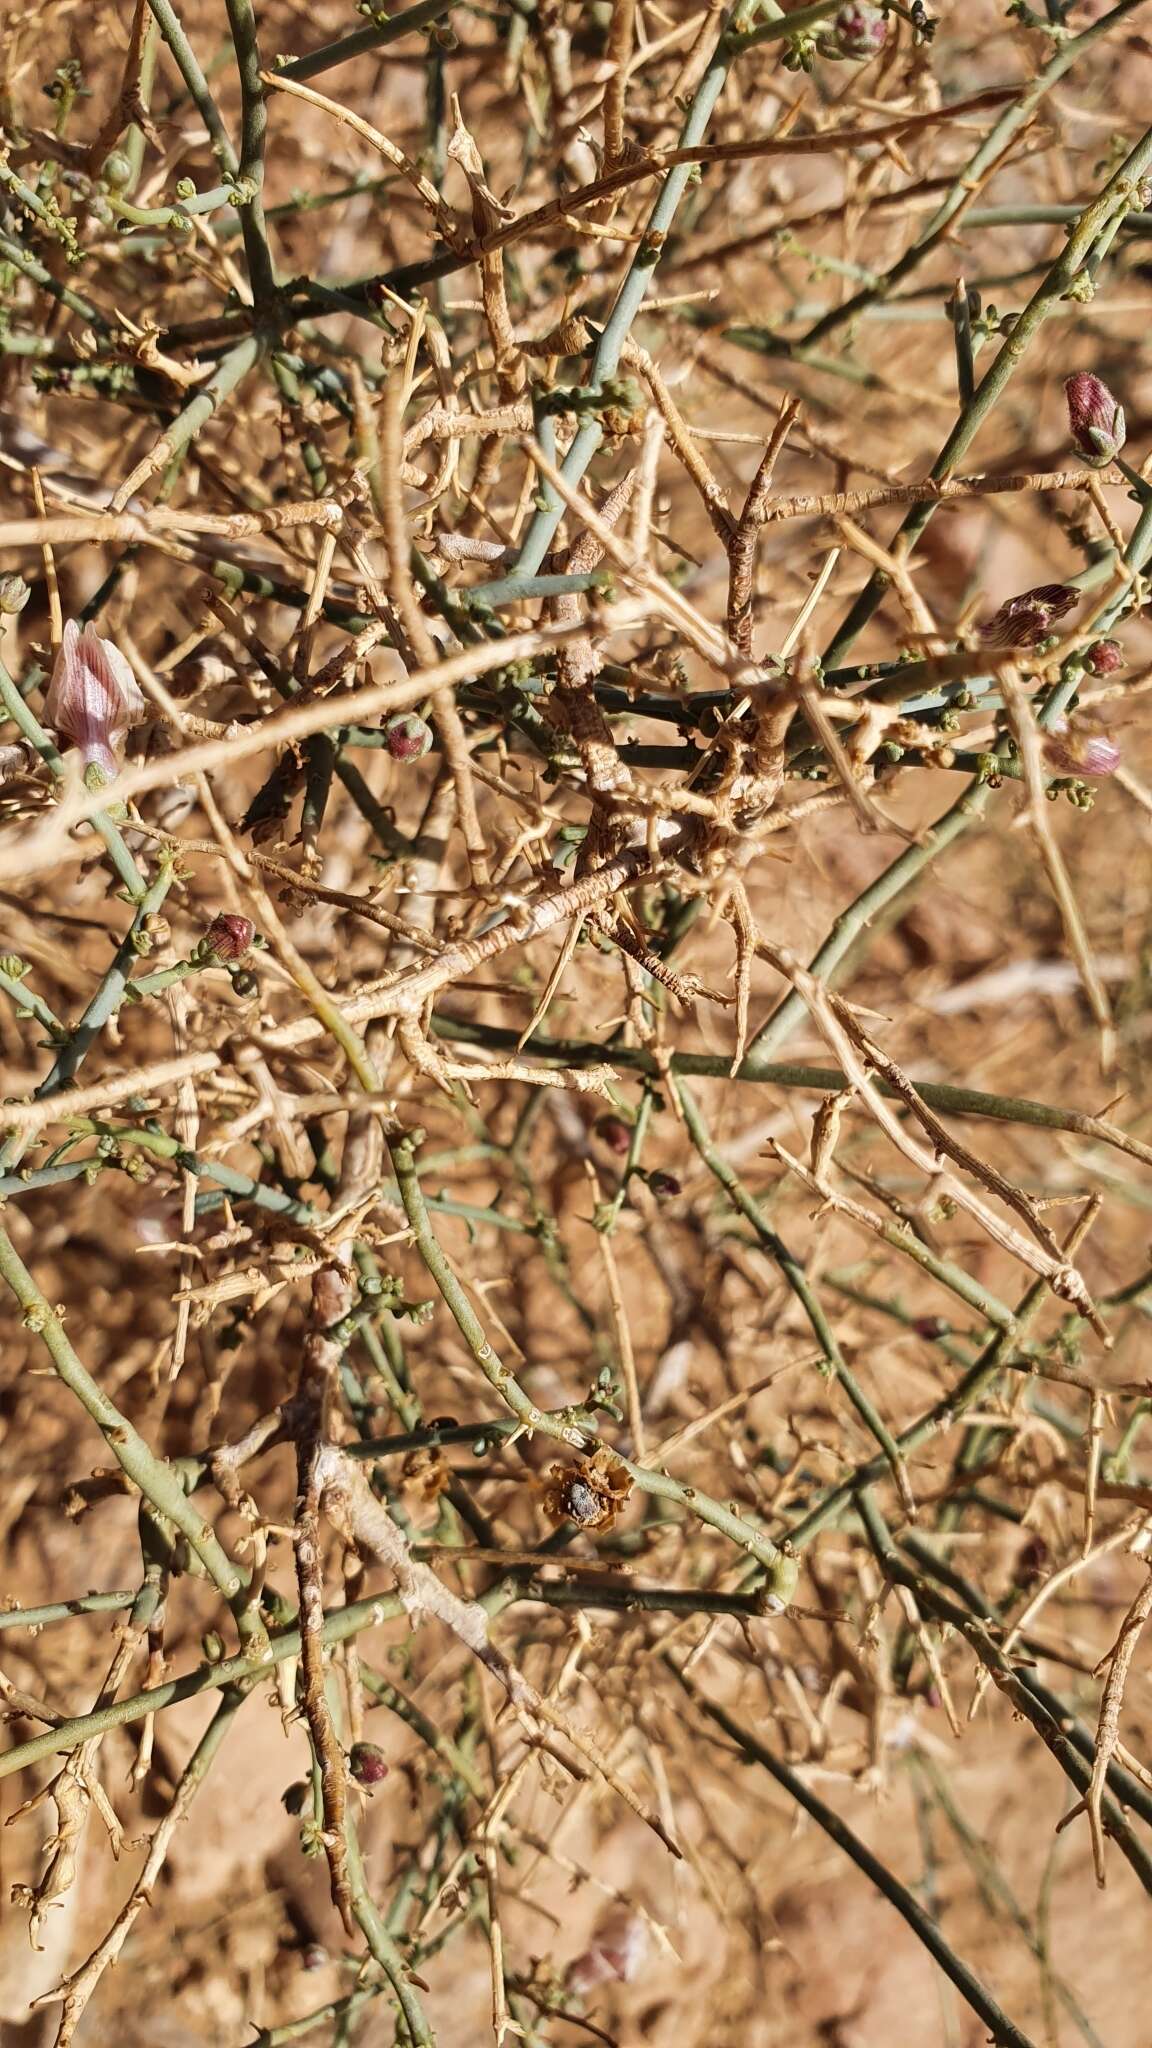 Image of Acanthorrhinum ramosissimum (Coss. & Durieu) Rothm.